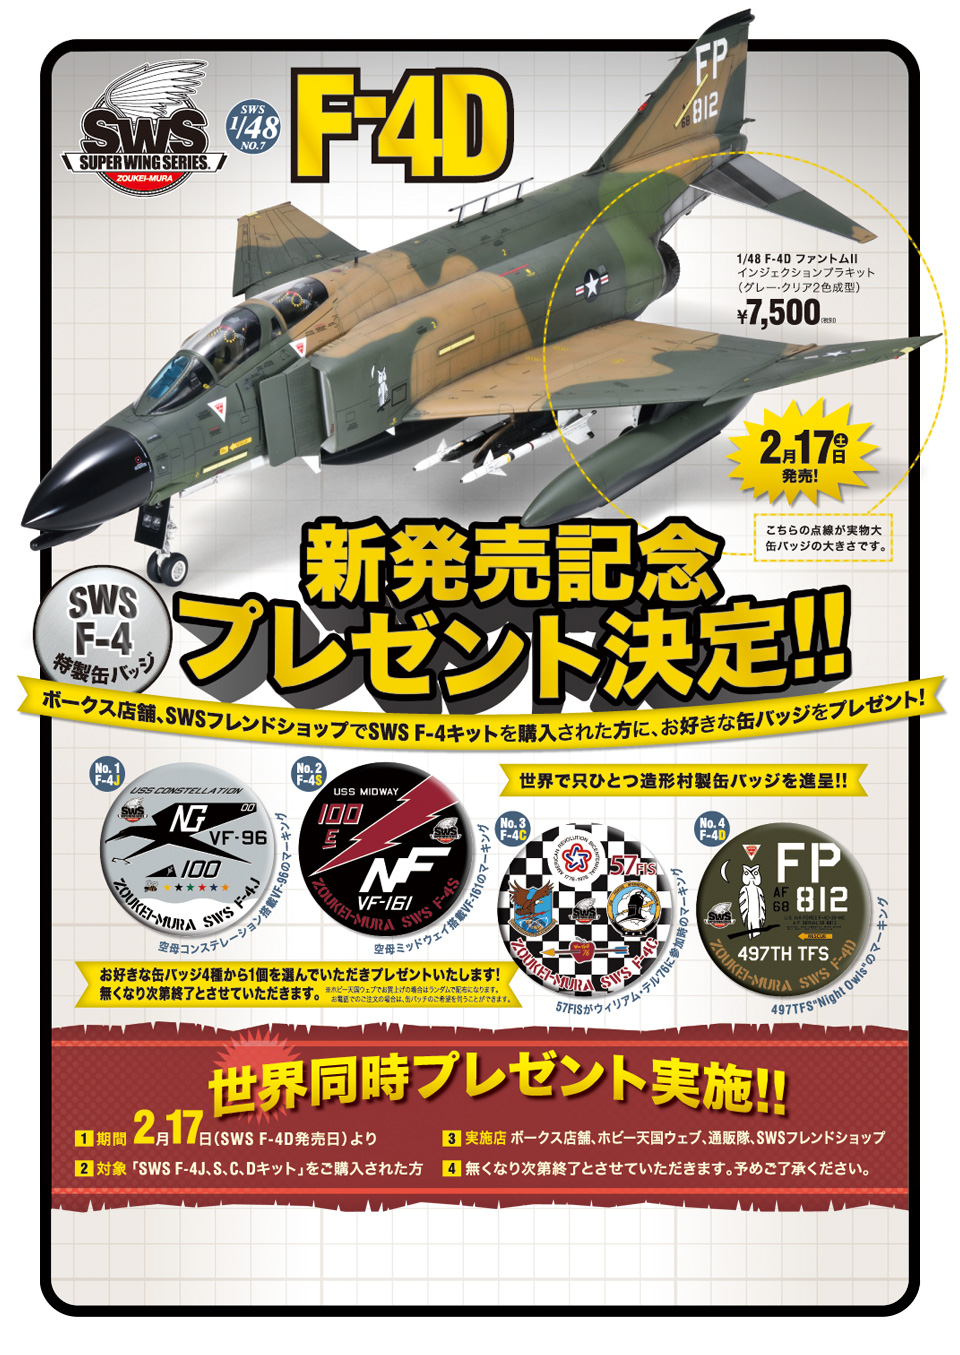 F-4D 新発売記念 特製缶バッジプレゼントキャンペーン